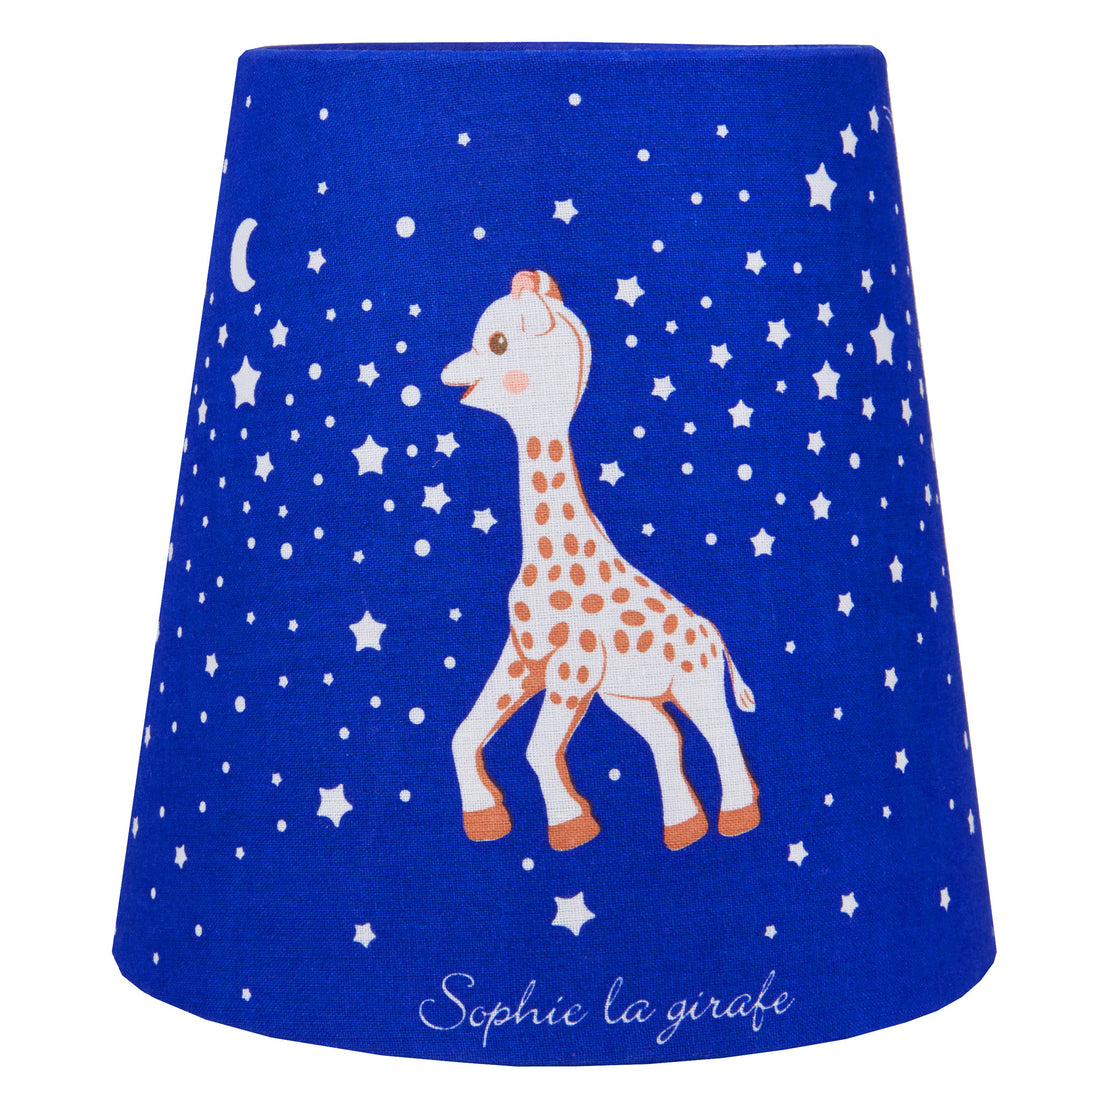 trousselier-sophie-the-giraffe-lamp-shade-01